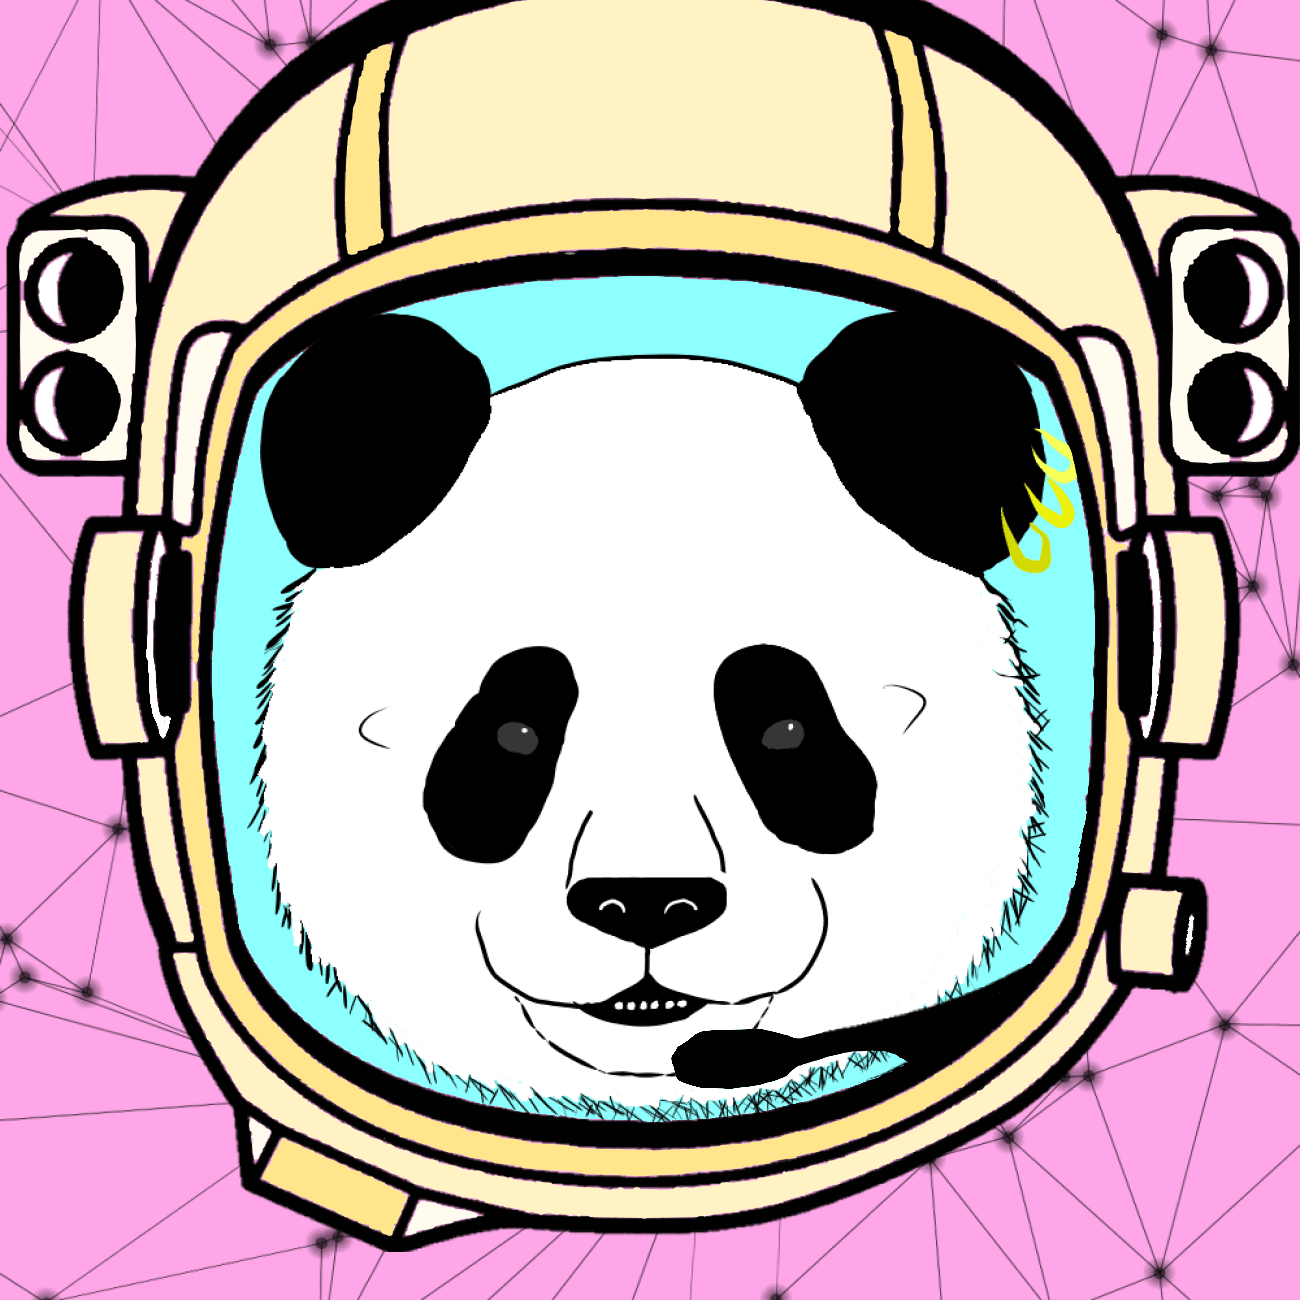 Intersteller Travellerz: Pete the Panda #10